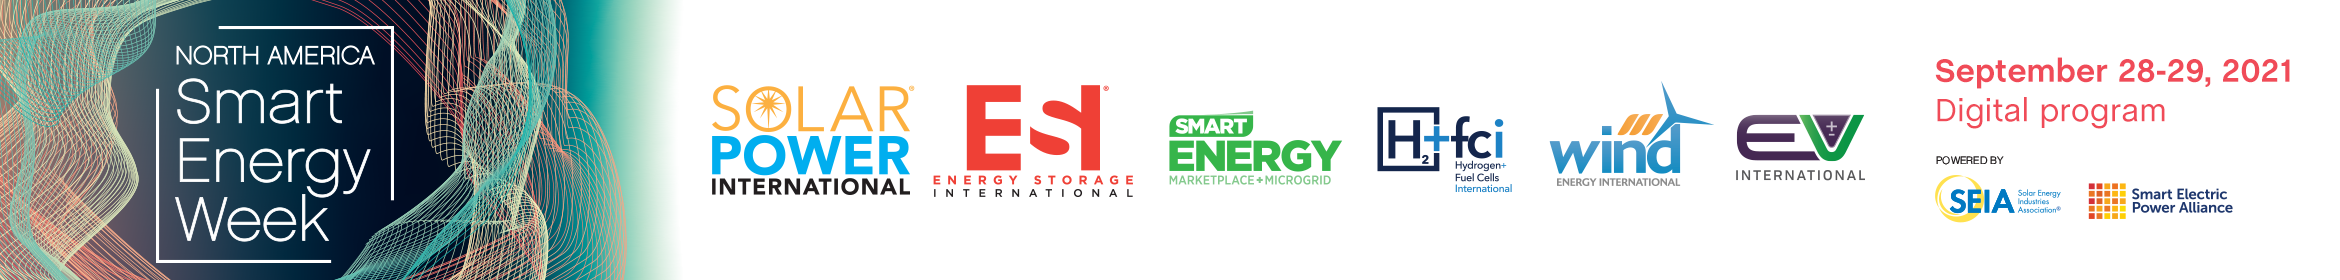 SPI, ESI & North America Smart Energy Week 2021 - Digital Program Main banner